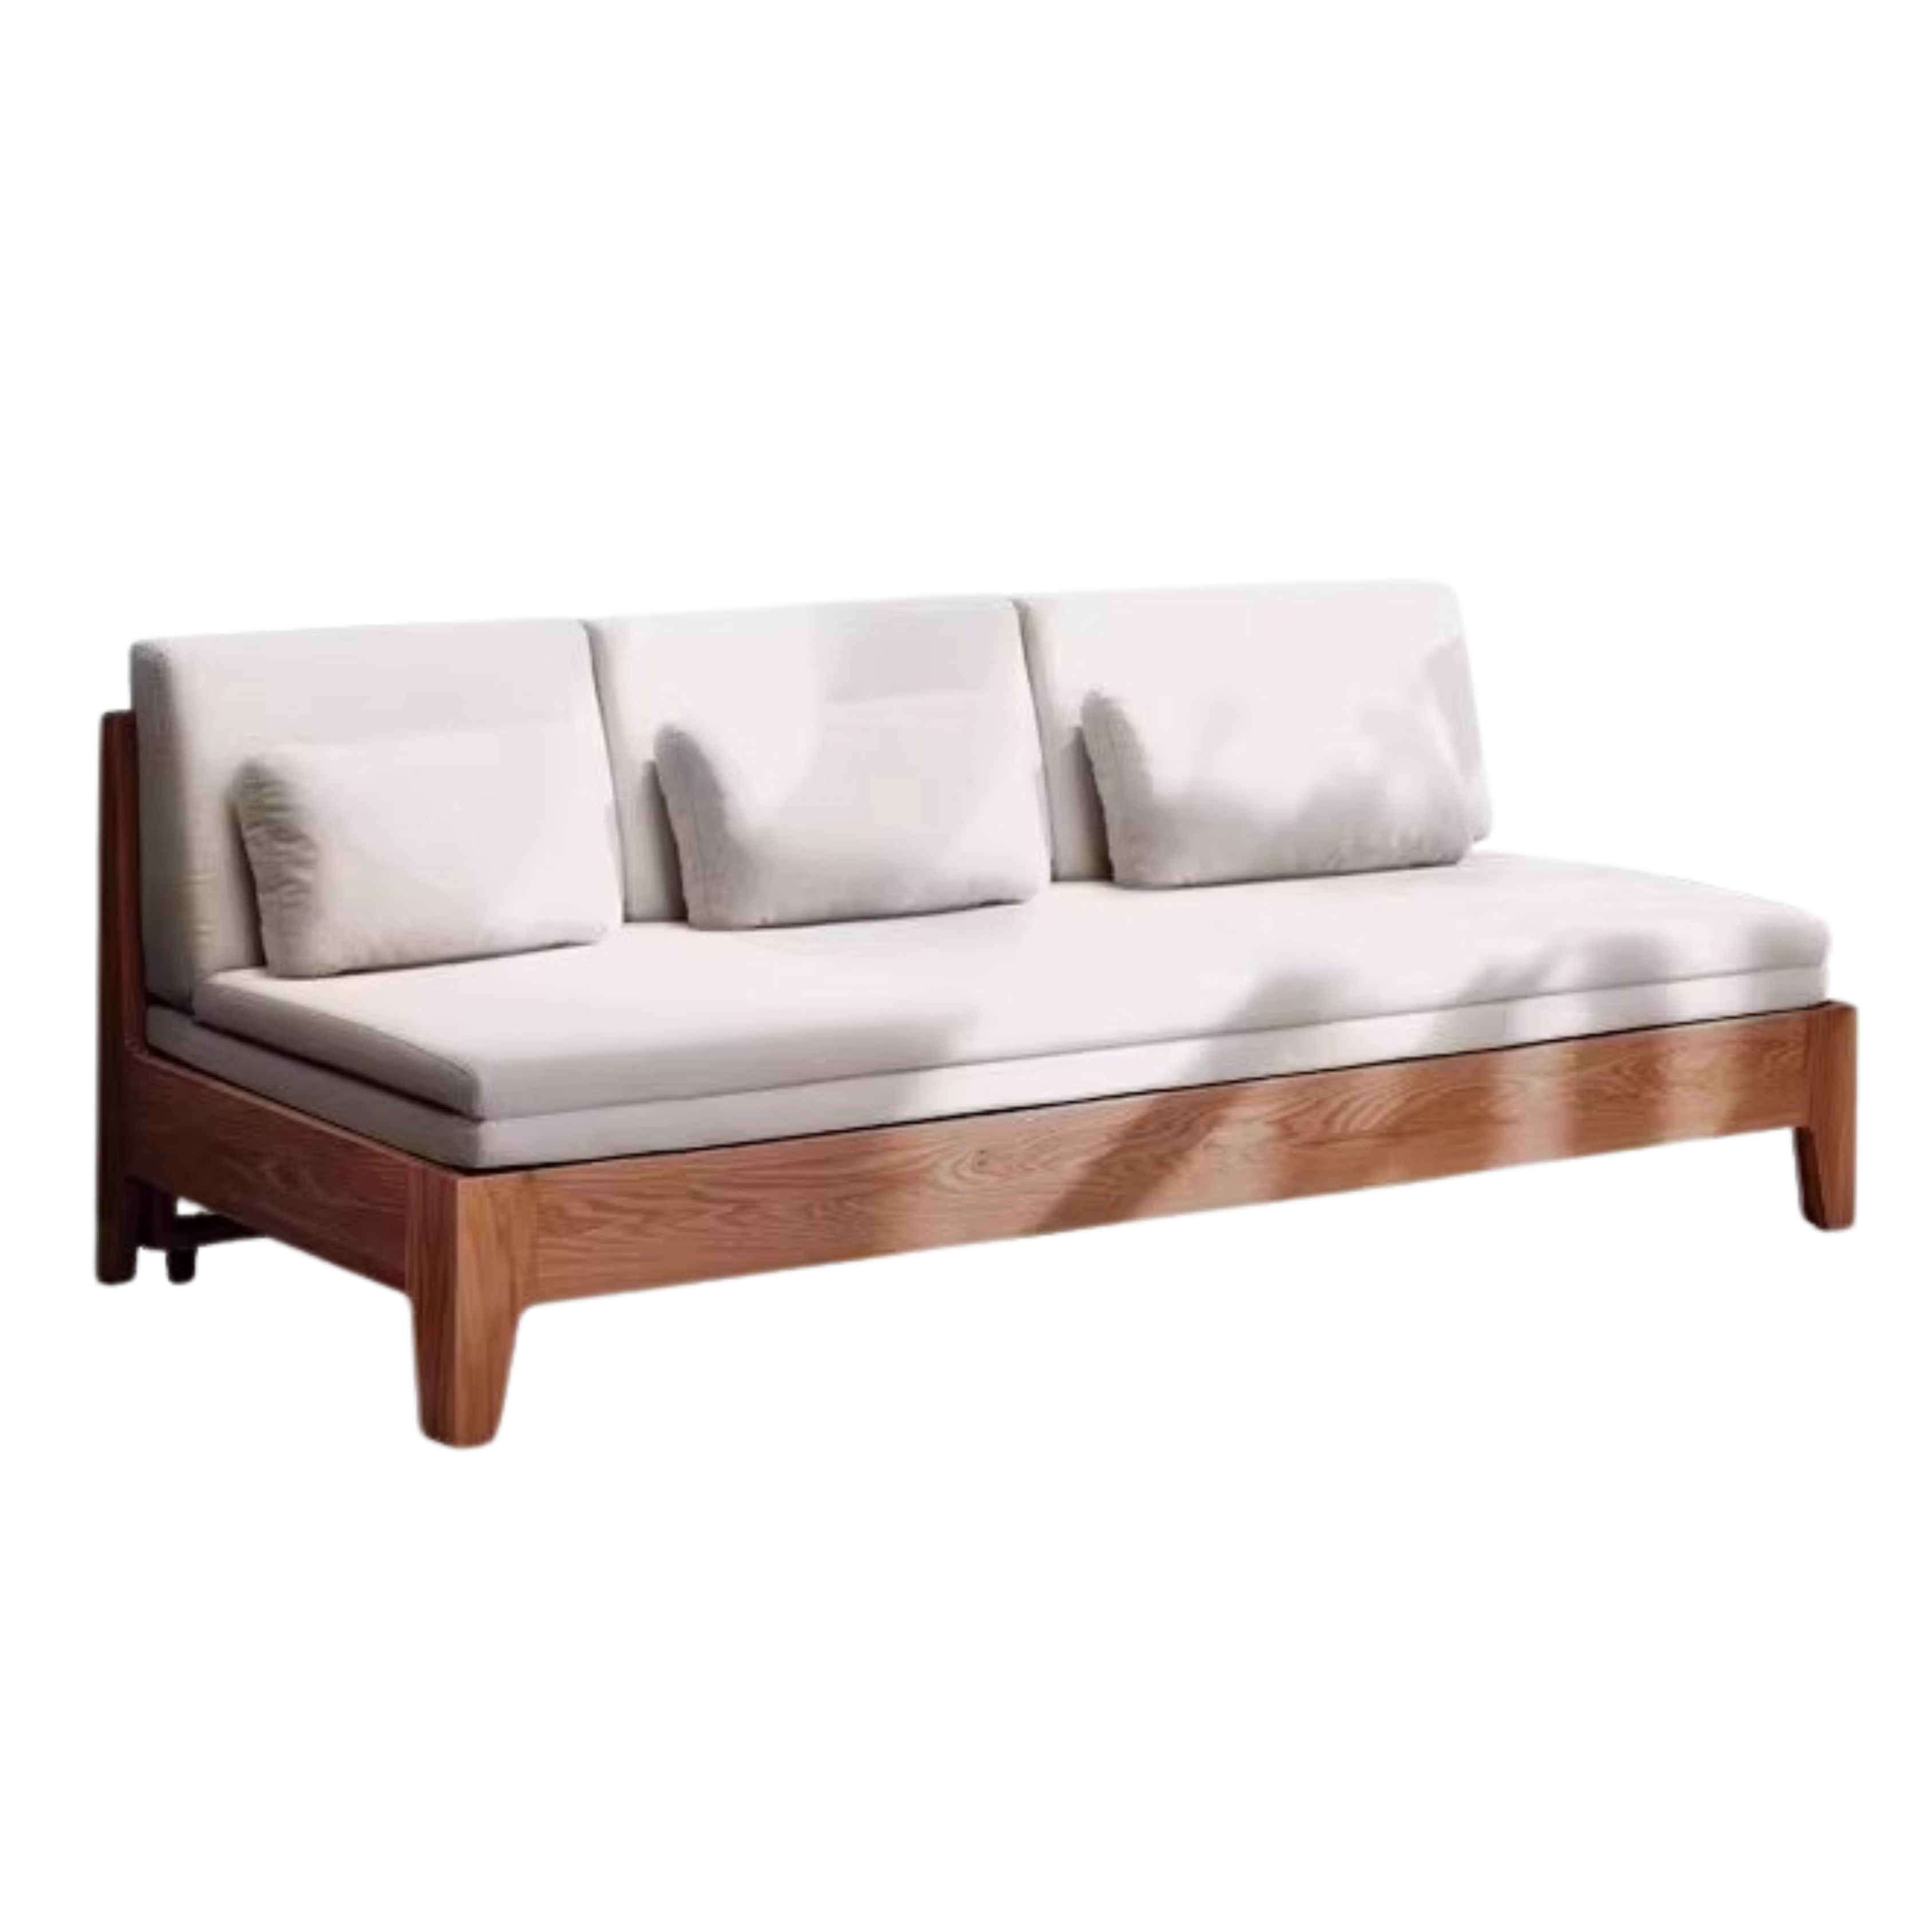 Oak solid wood sofa bed dual-purpose foldable telescopic bed